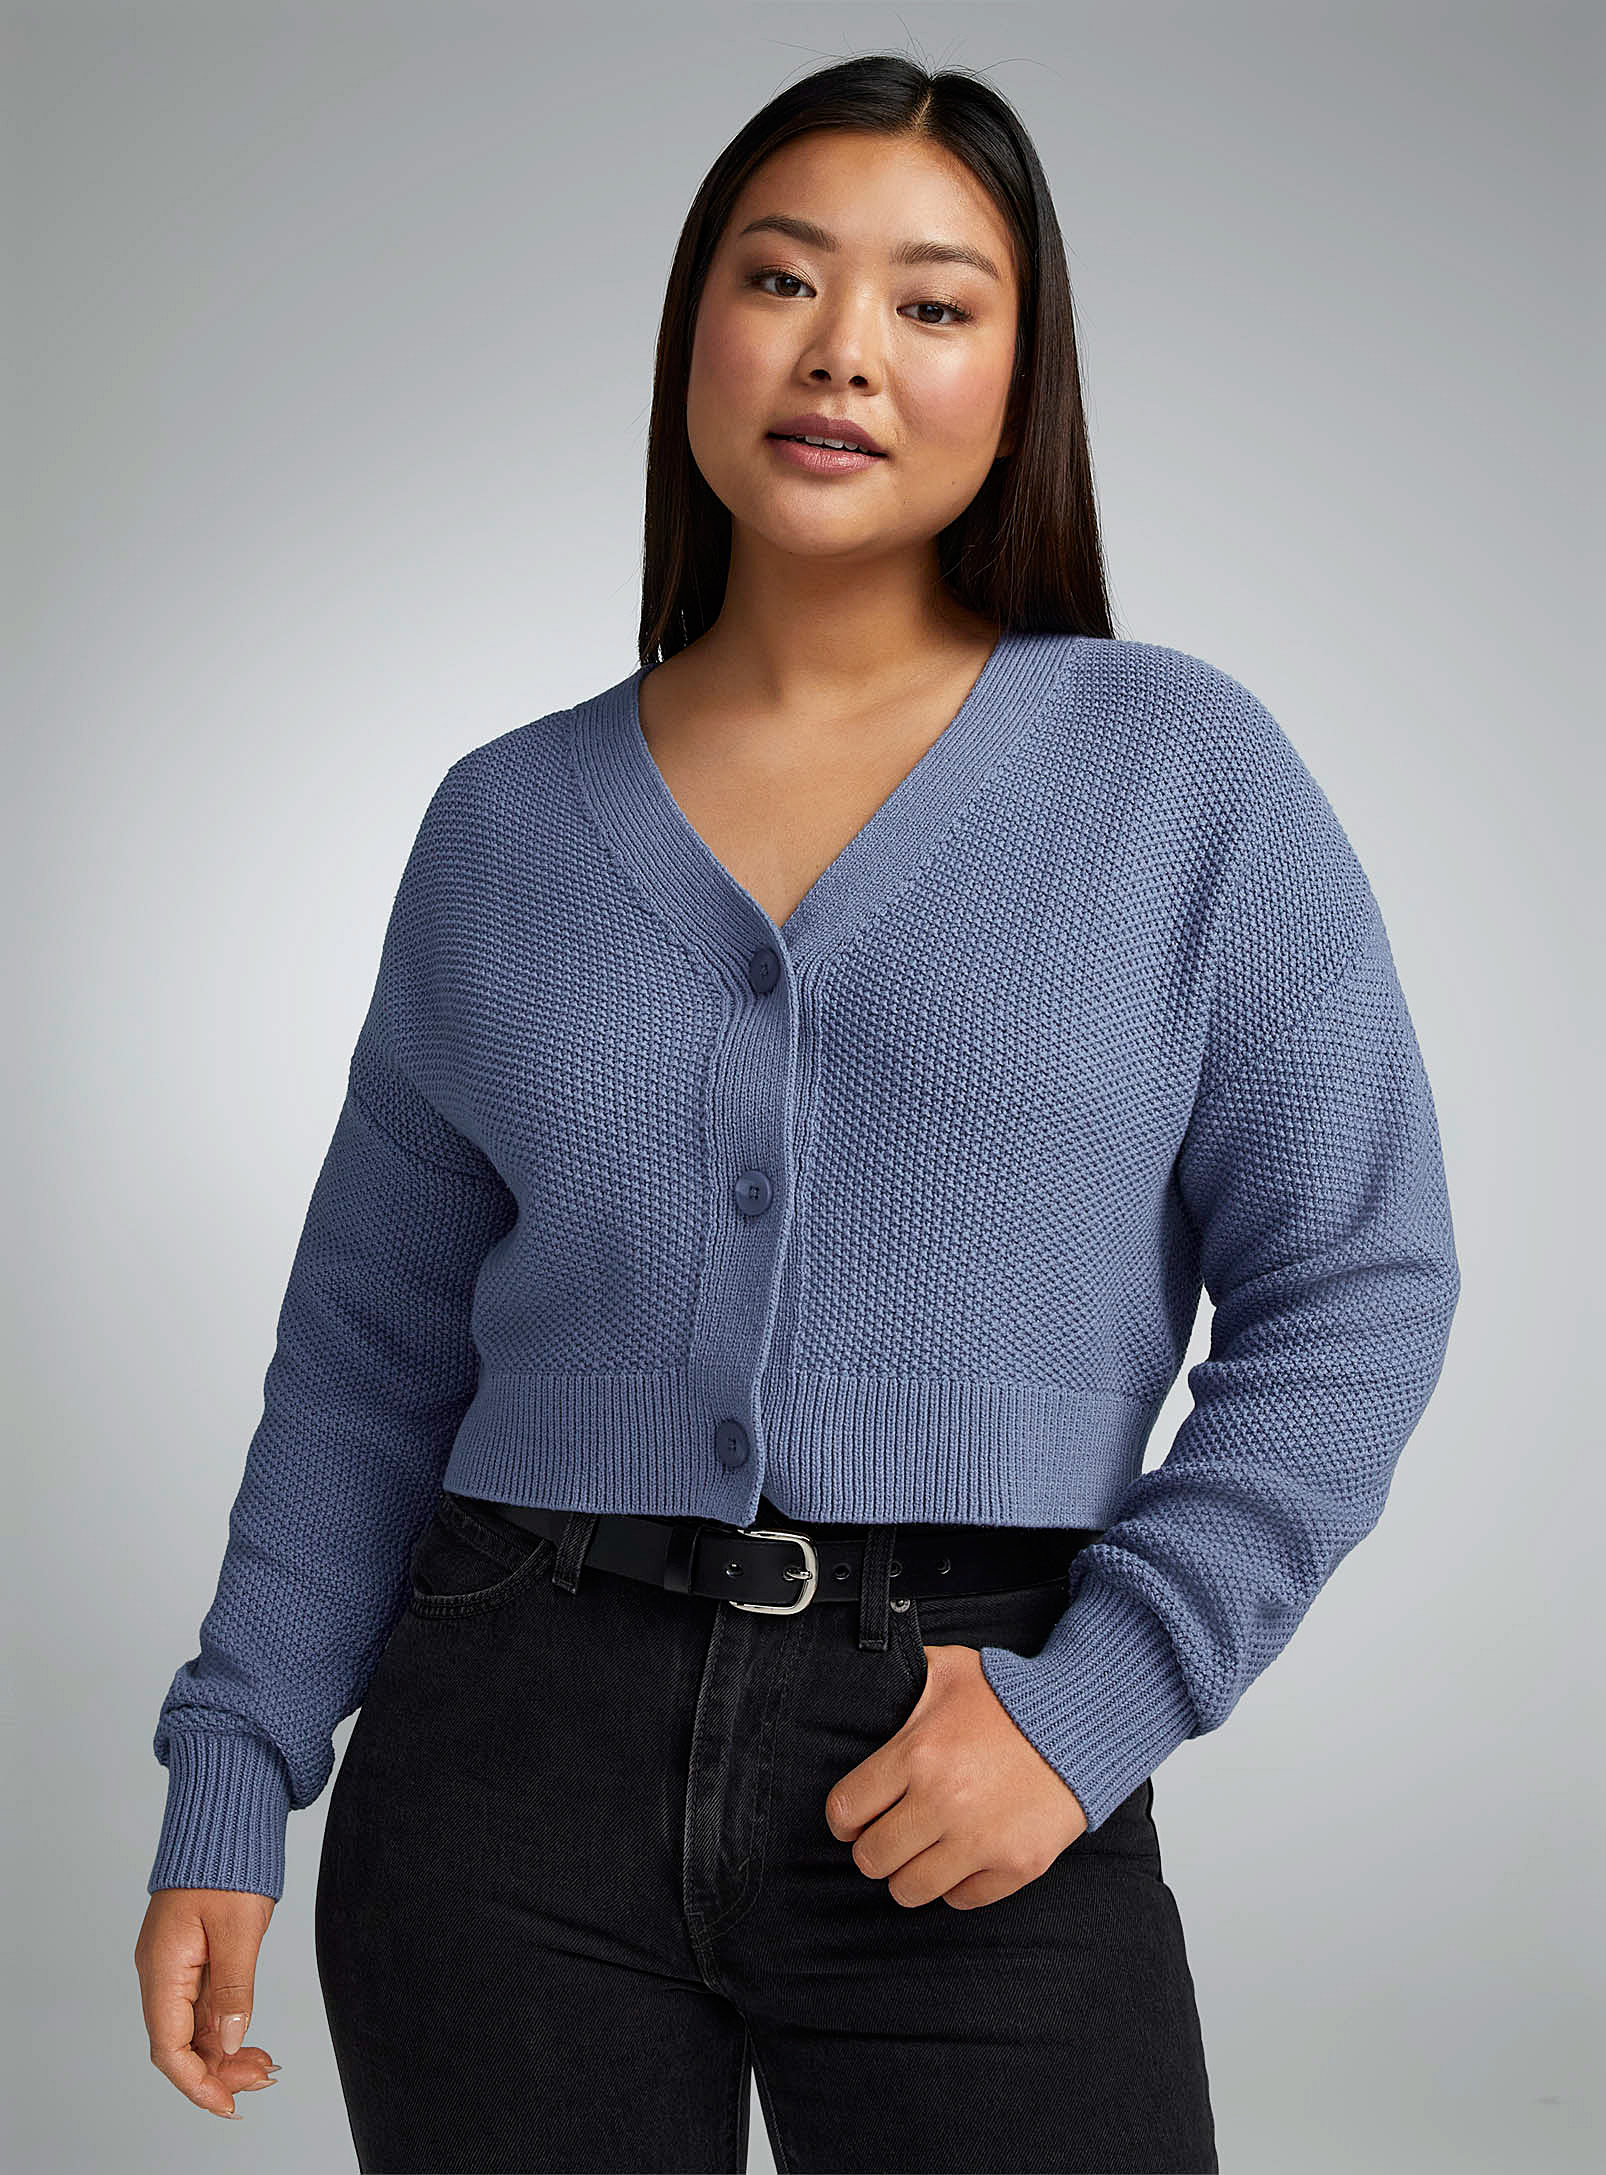 Twik - Women's Moss stitch cropped Cardigan Sweater